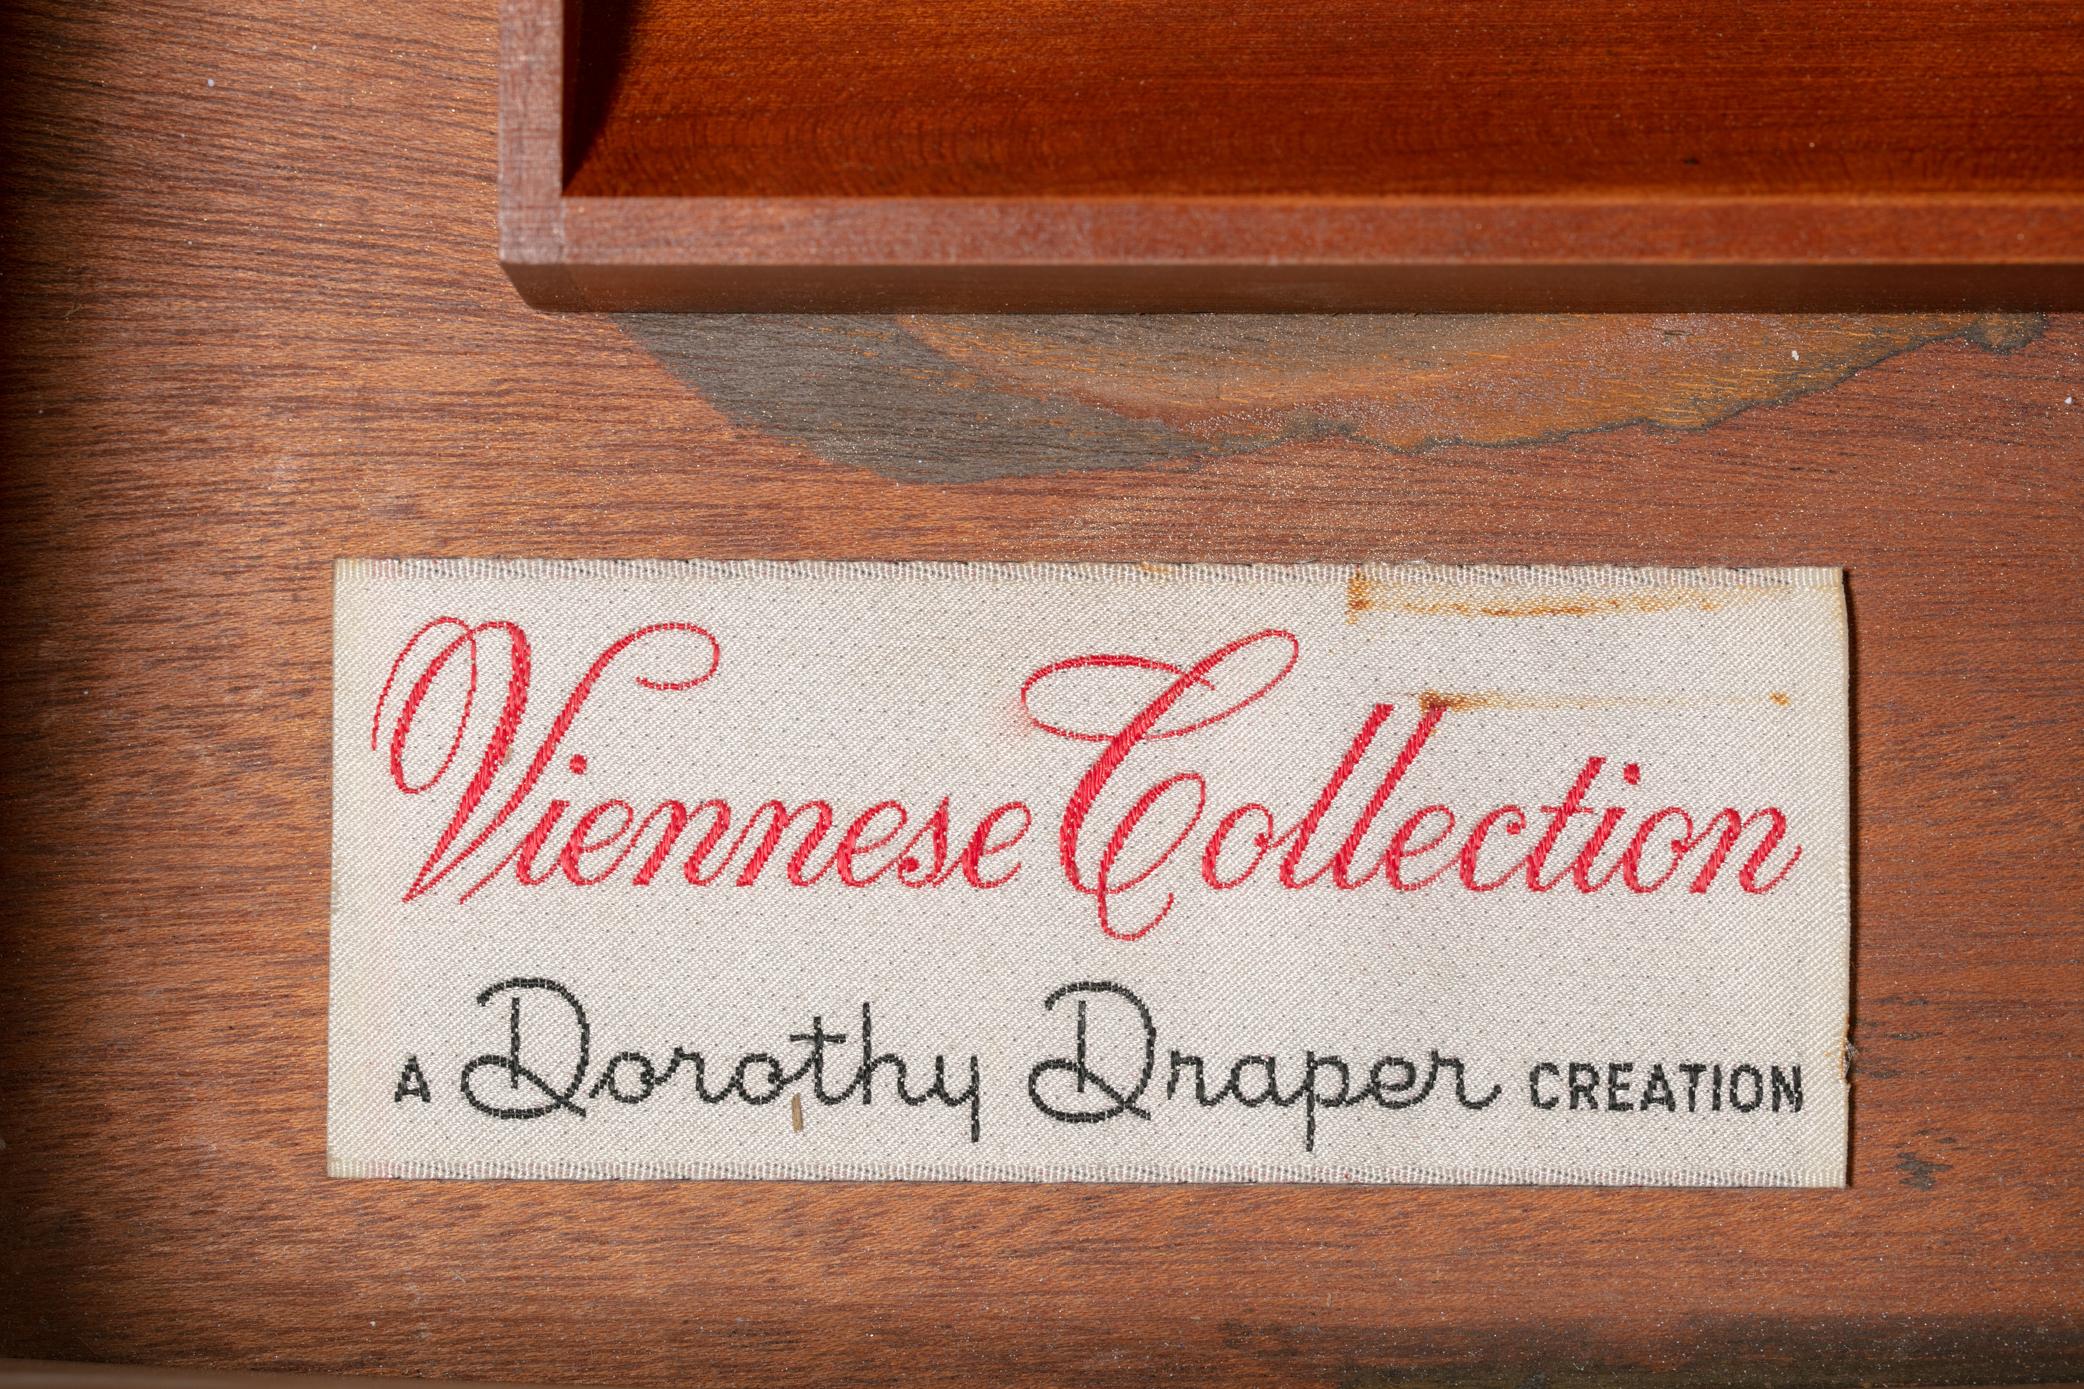 Coffre de la collection Viennese de Dorothy Draper laqué en ivoire, vers 1963 en vente 8